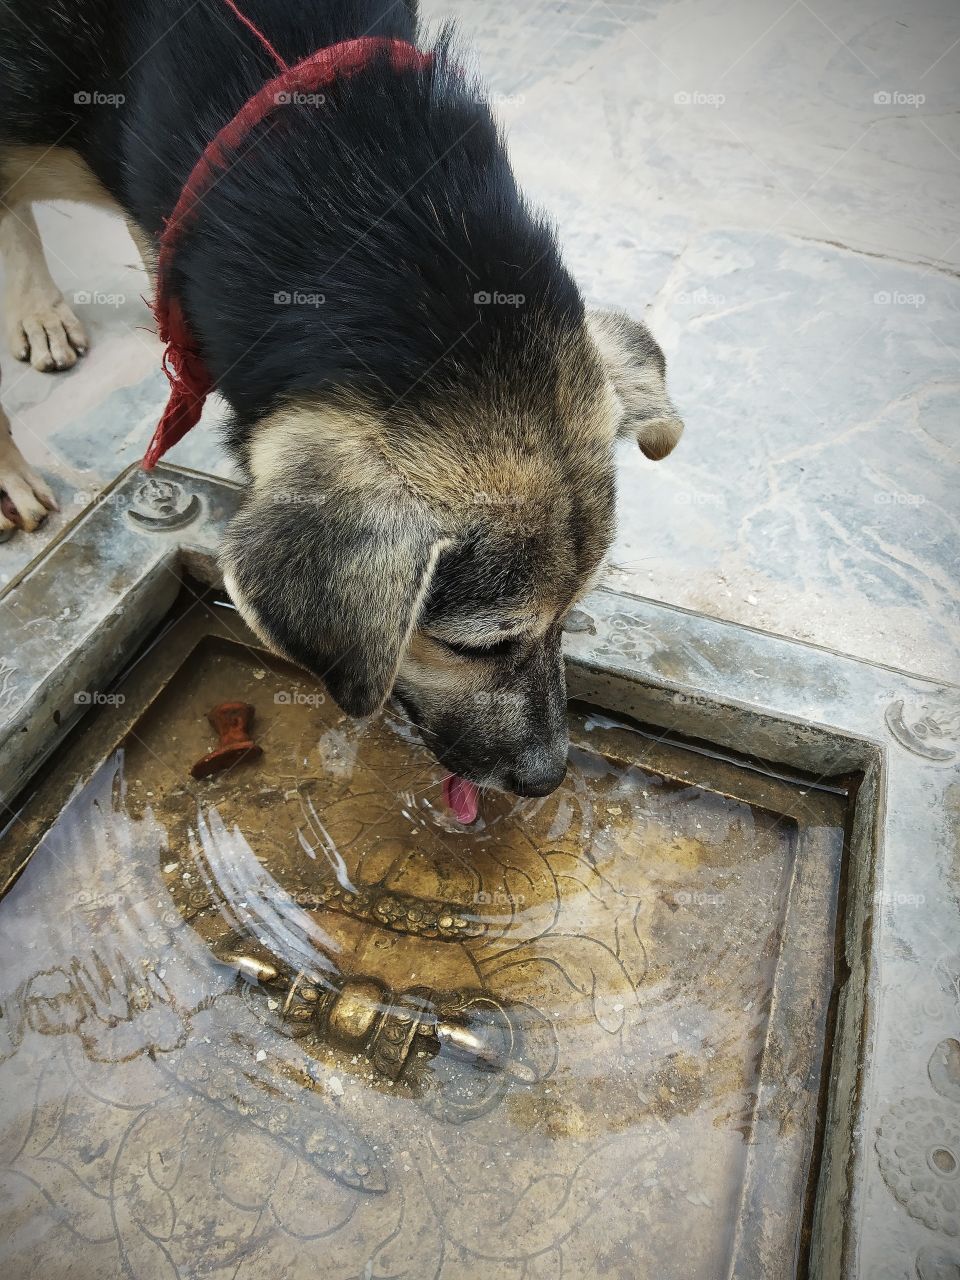 Thirsty dog drinking water